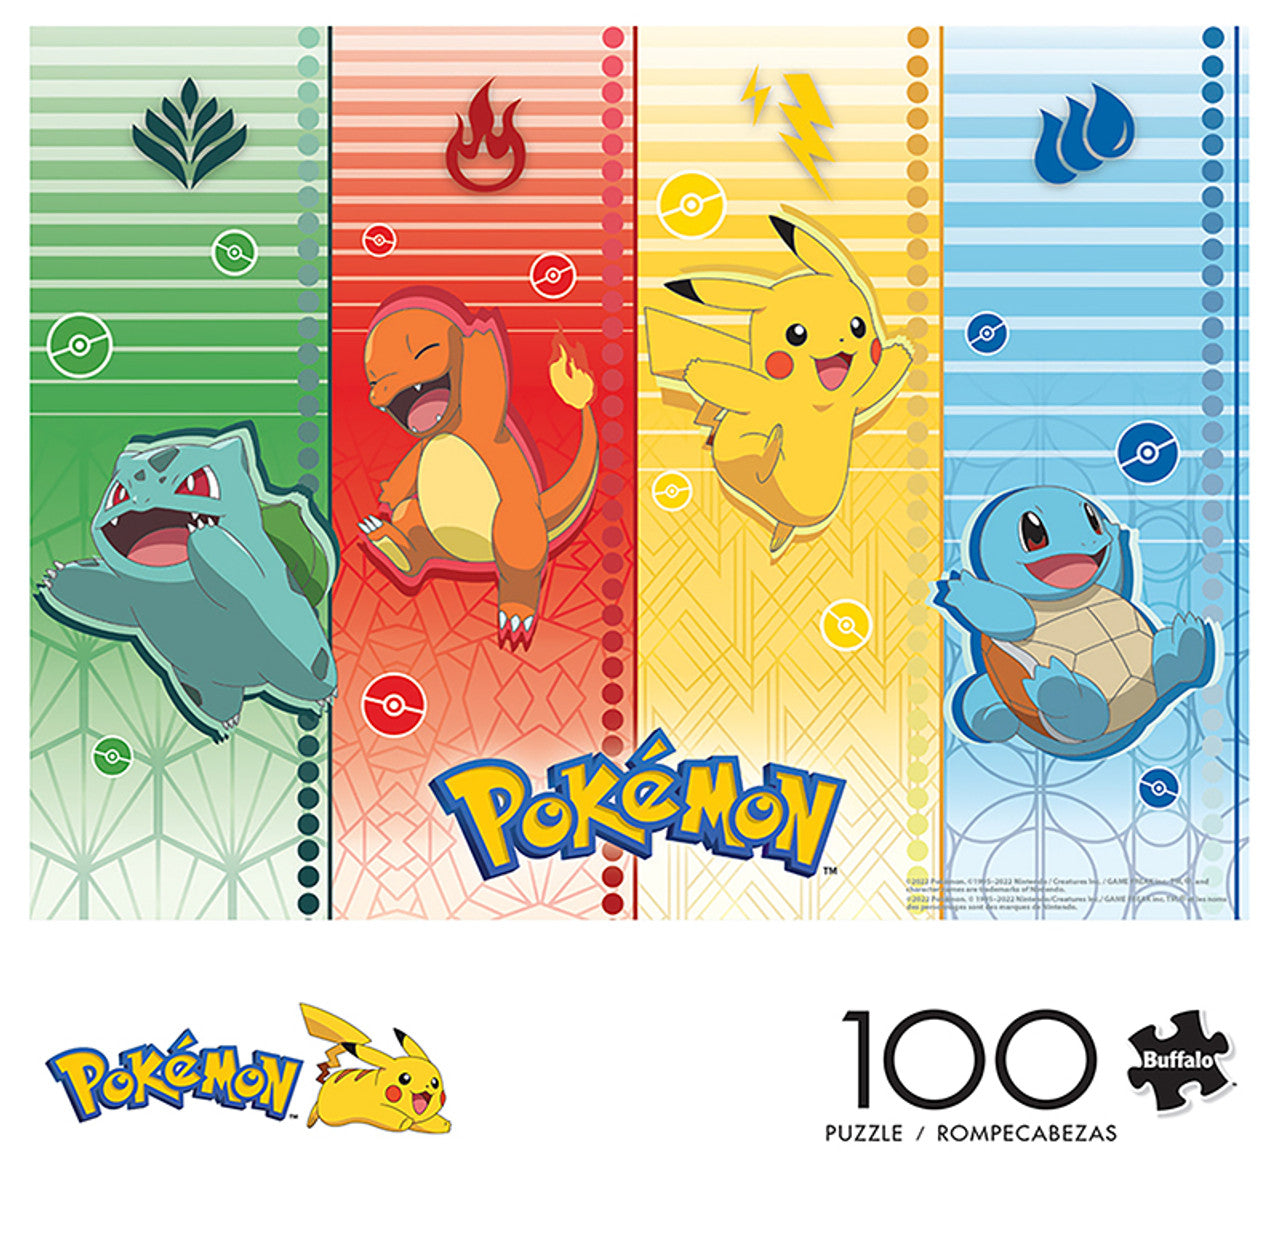 Ravensburger Pokemon 5000 Piece Puzzle - NEW - FREE shipping!